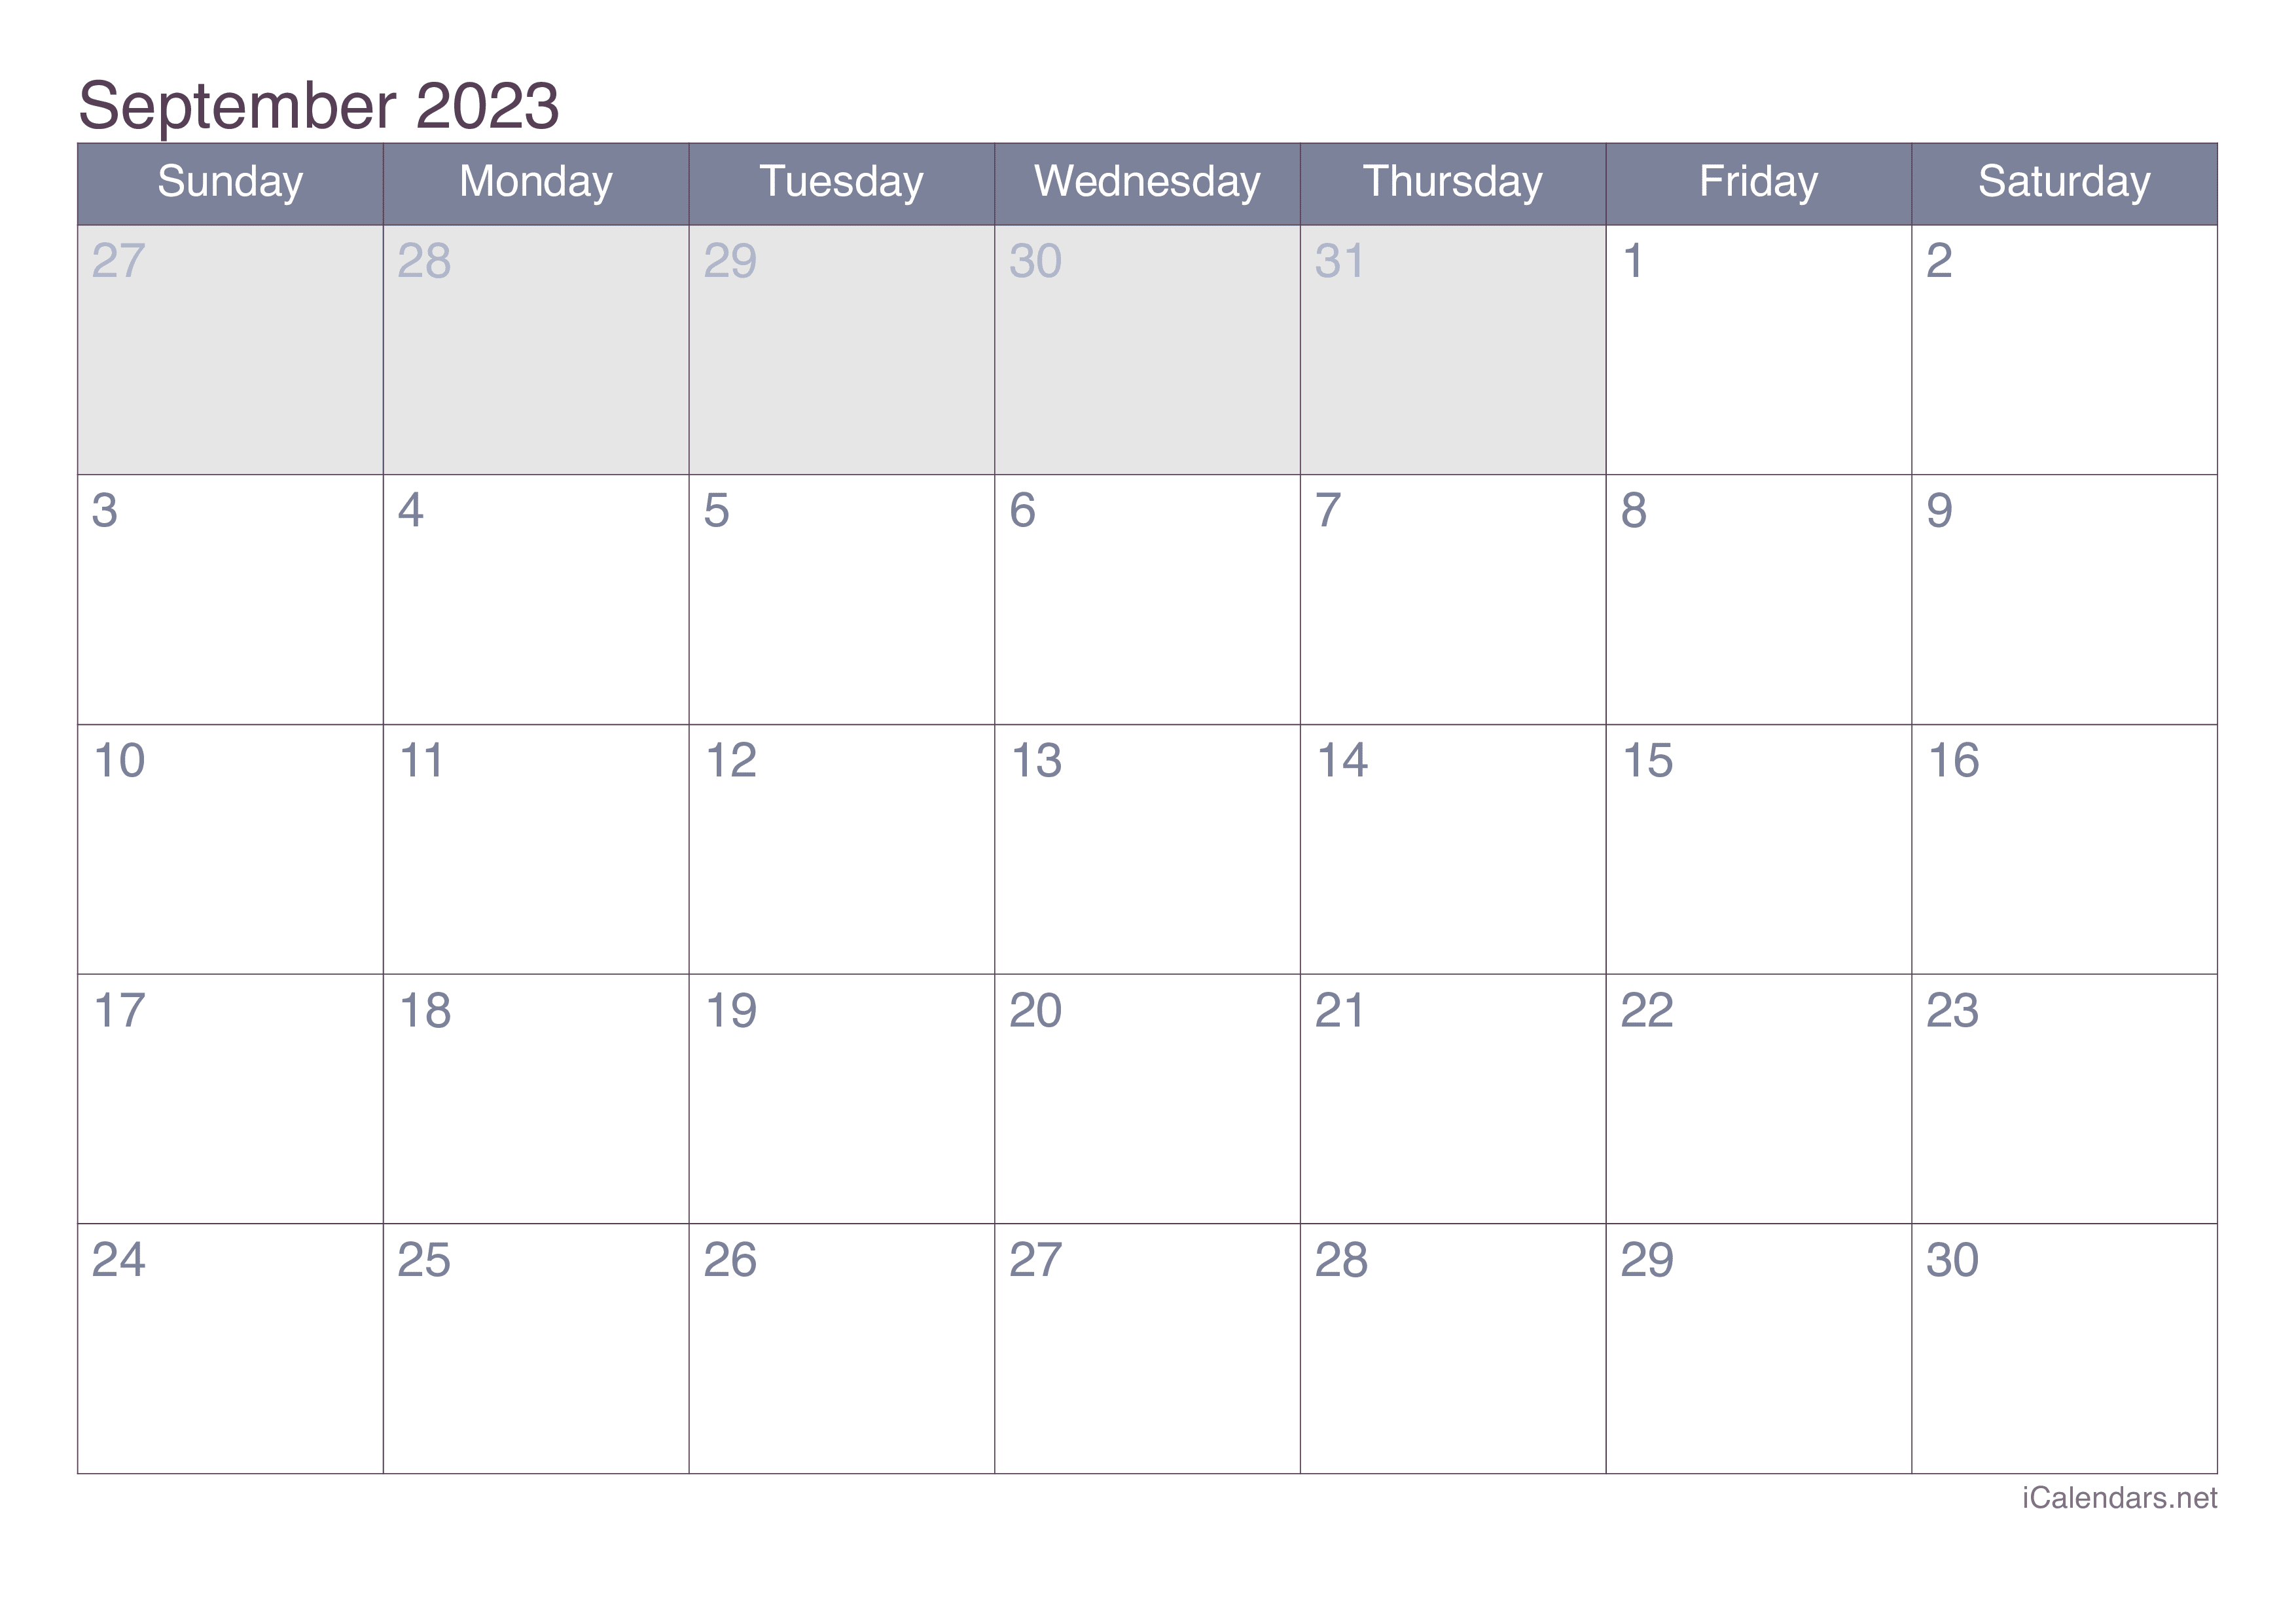 september-2023-calendar